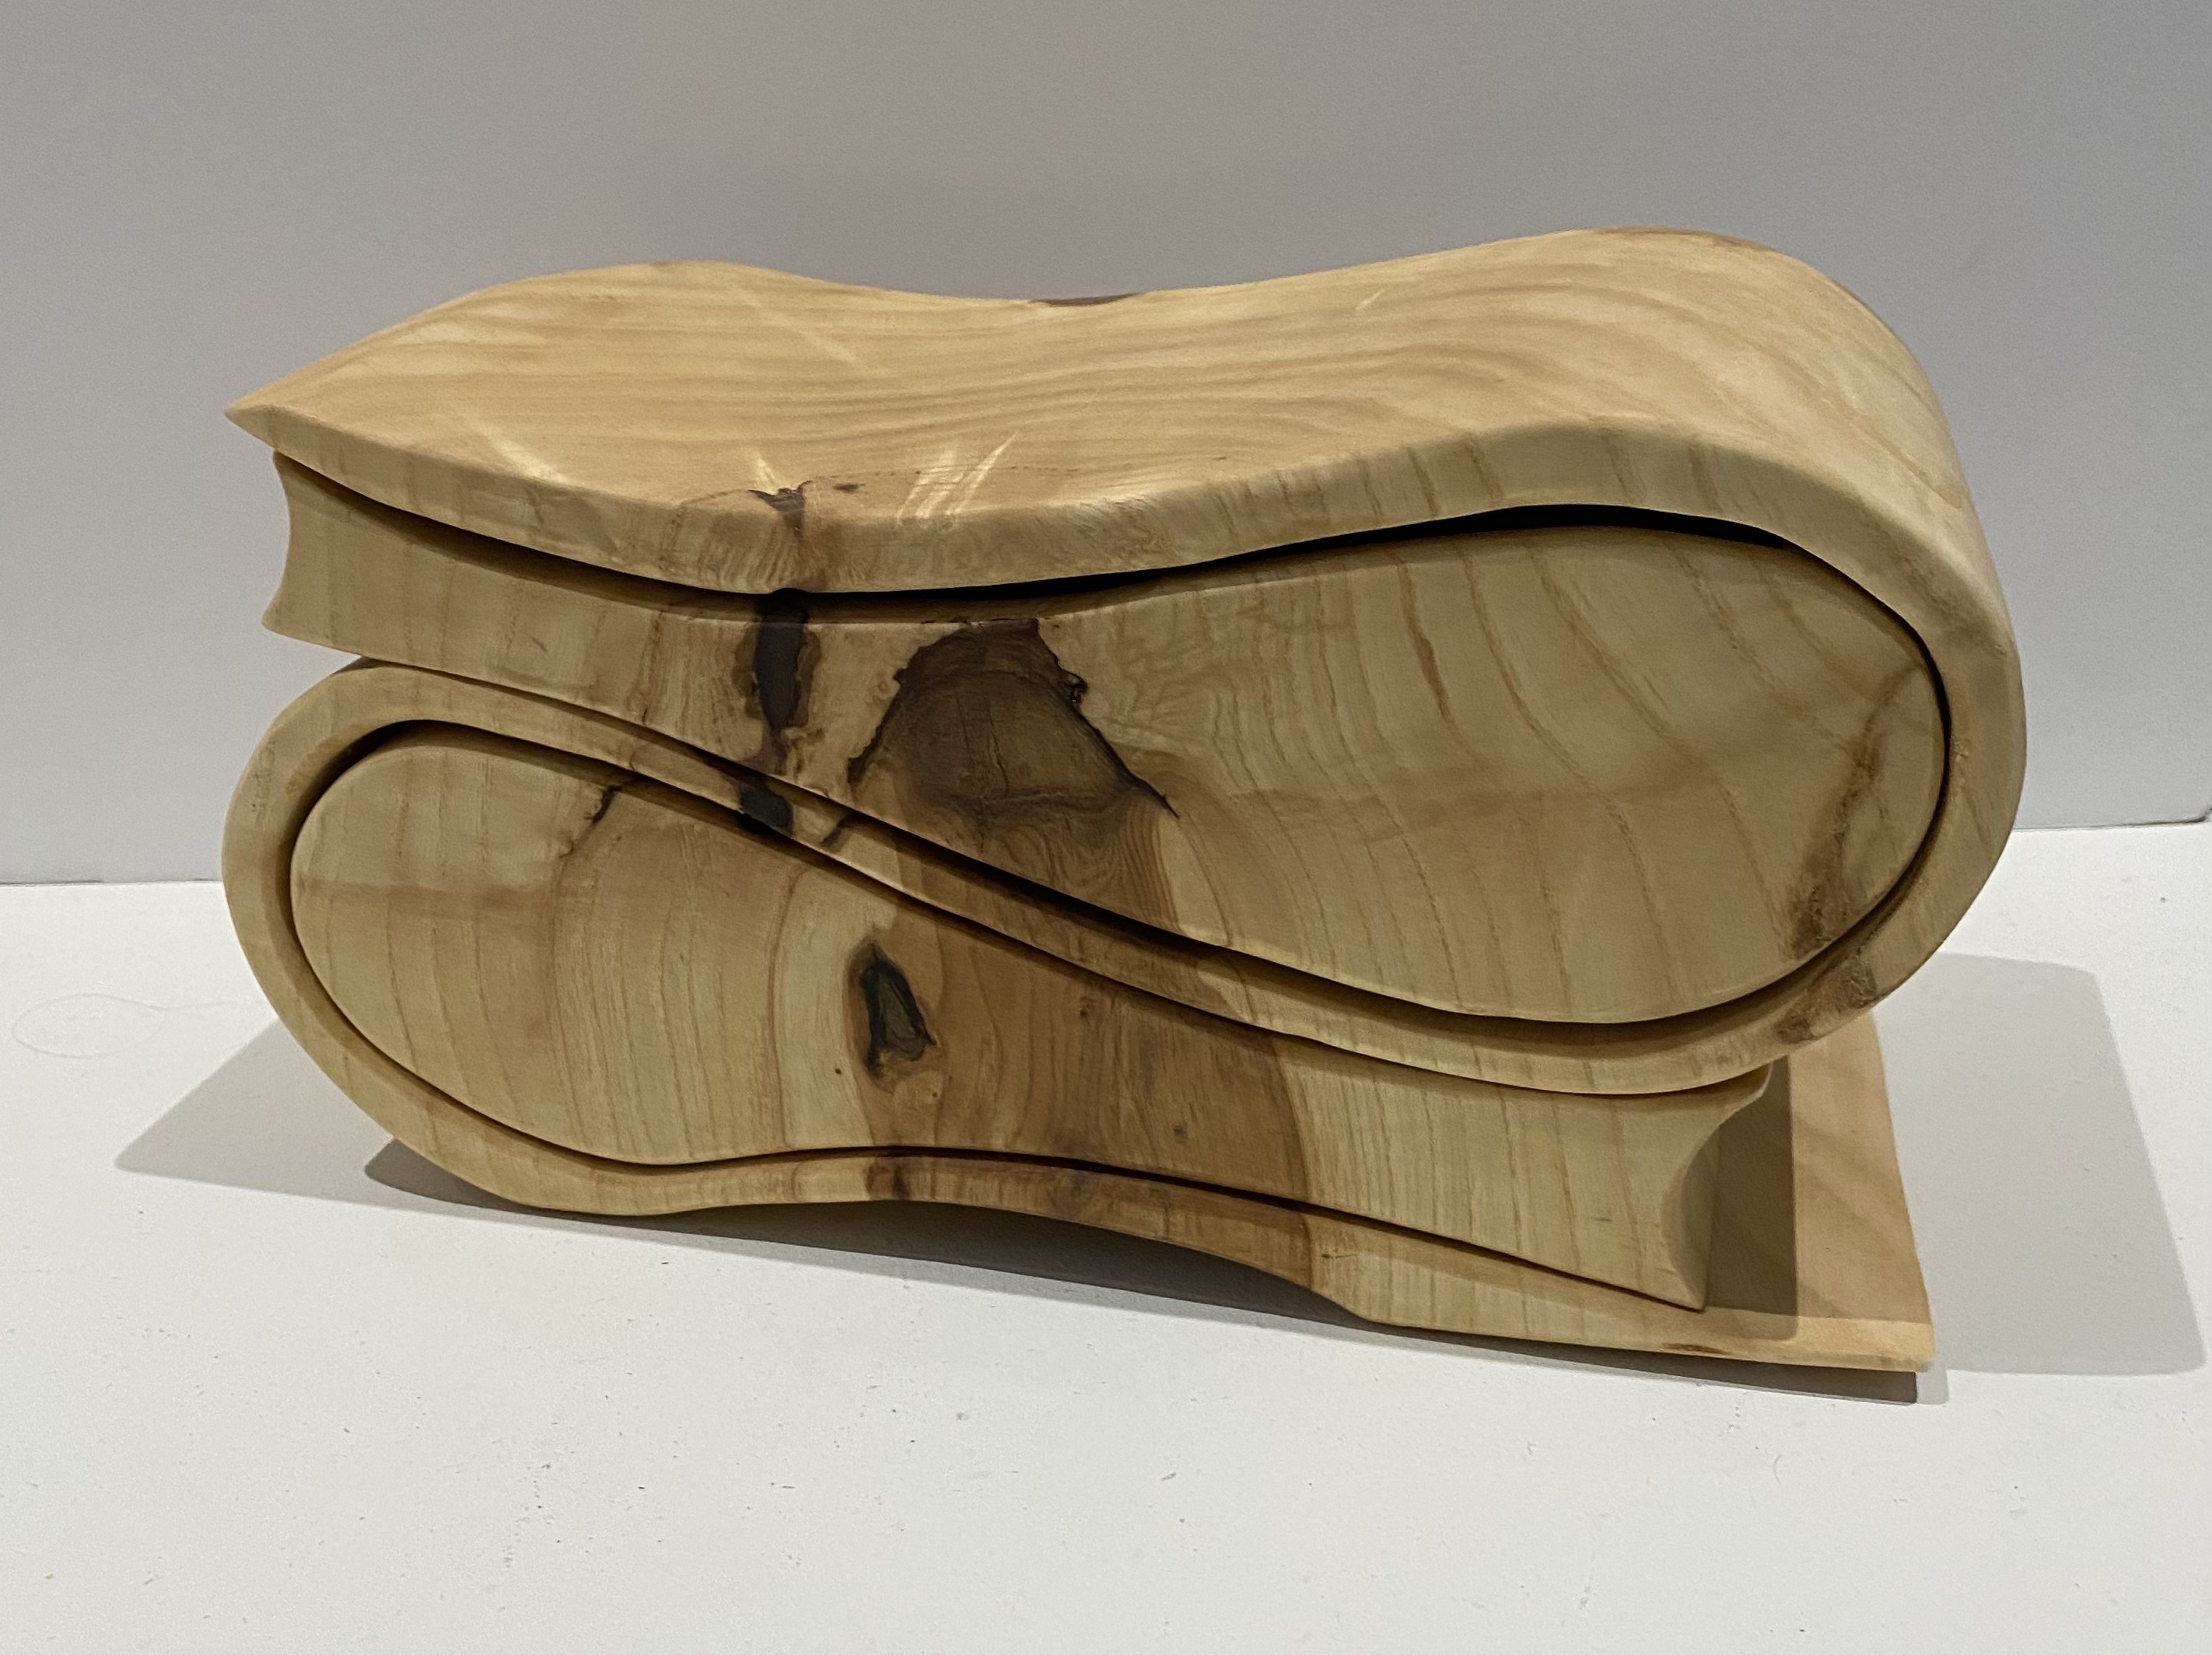 Bandsaw Box
Ash
$125